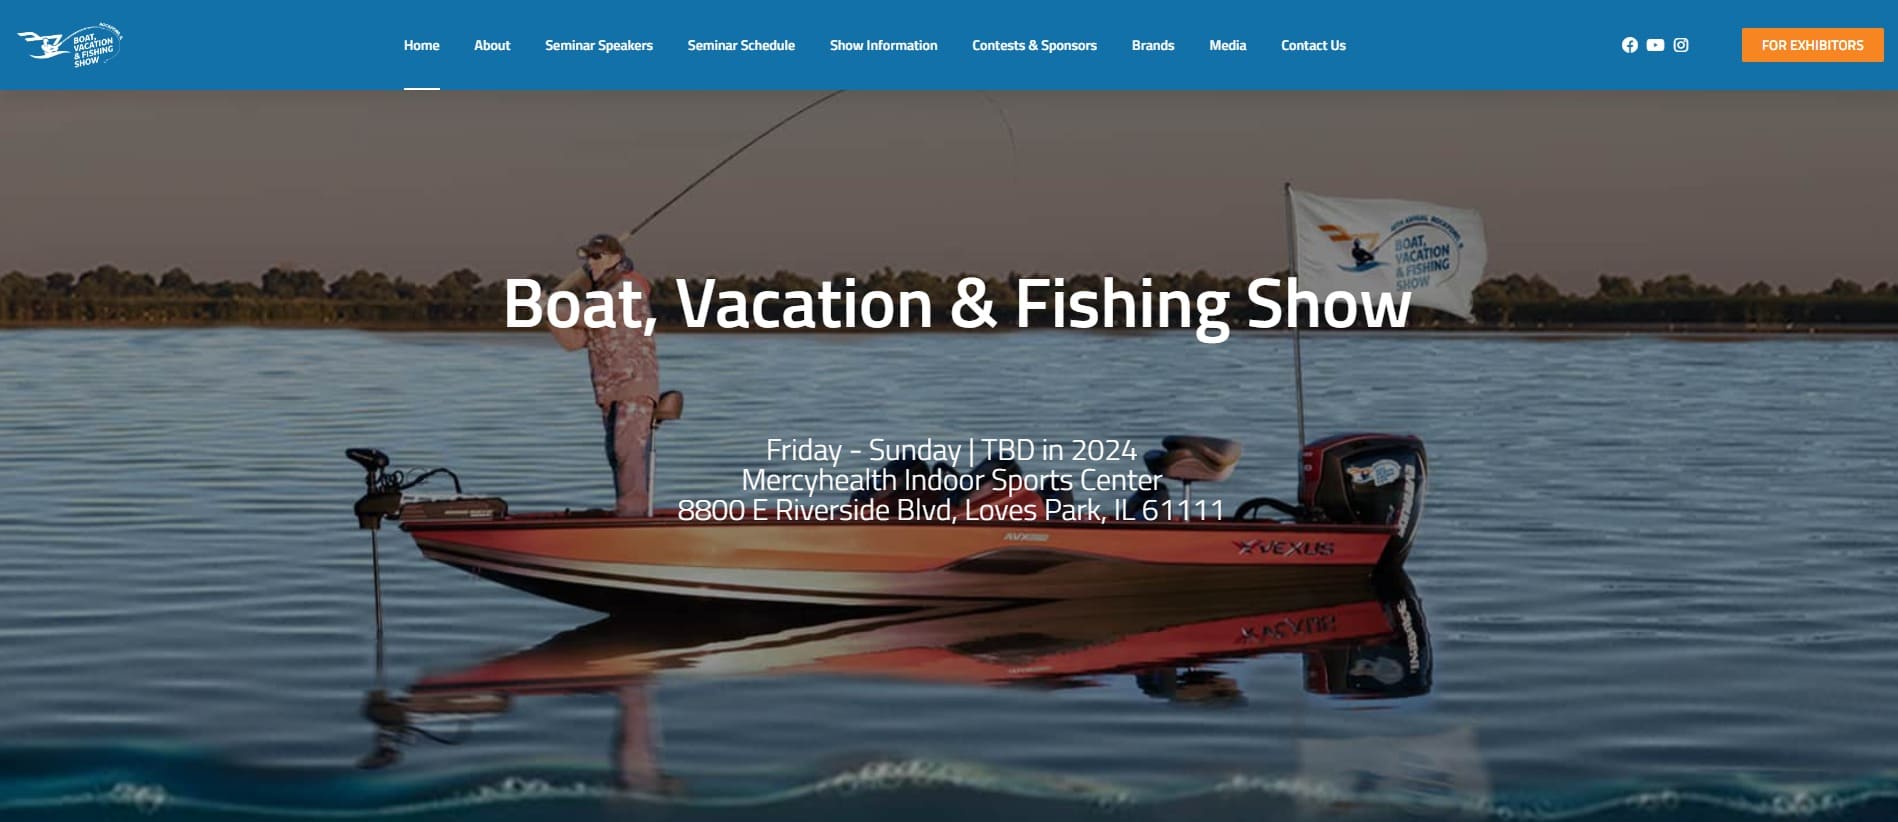 Boat, Vacation & Fishing Show